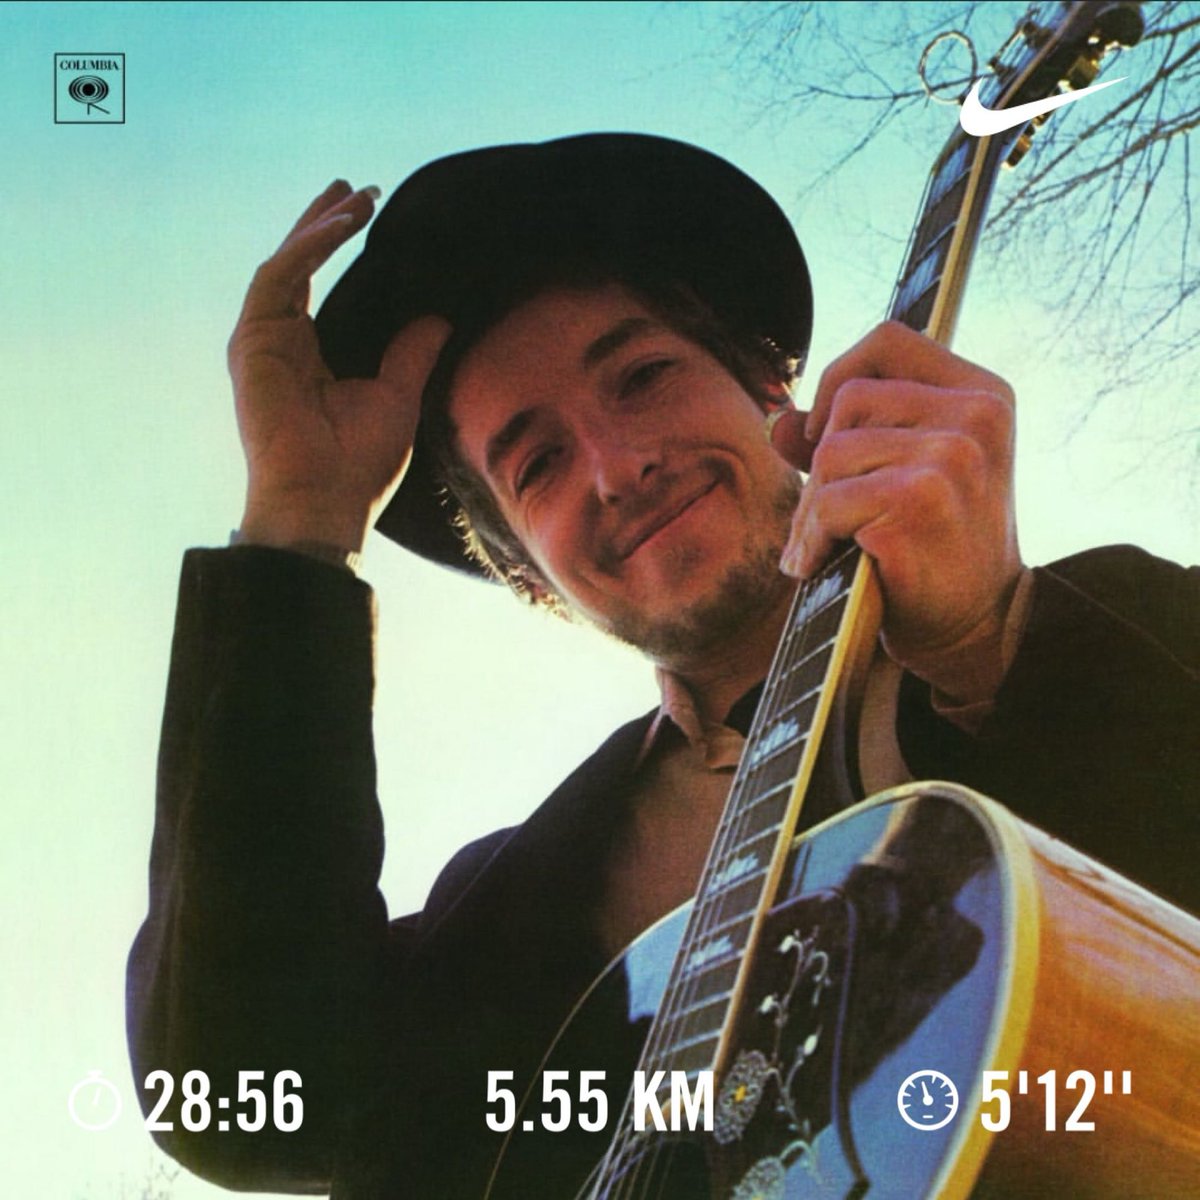 NASHVILLE SKYLINE // Bob Dylan // 09 • 04 • 1969

#NashvilleSkiline #BobDylan #Country #Rock #Running #NikeRunning #NRC #ComeRunWithUs #JustDoIt #RunWithMusic #AlbumOfTheDay #55Anniversary